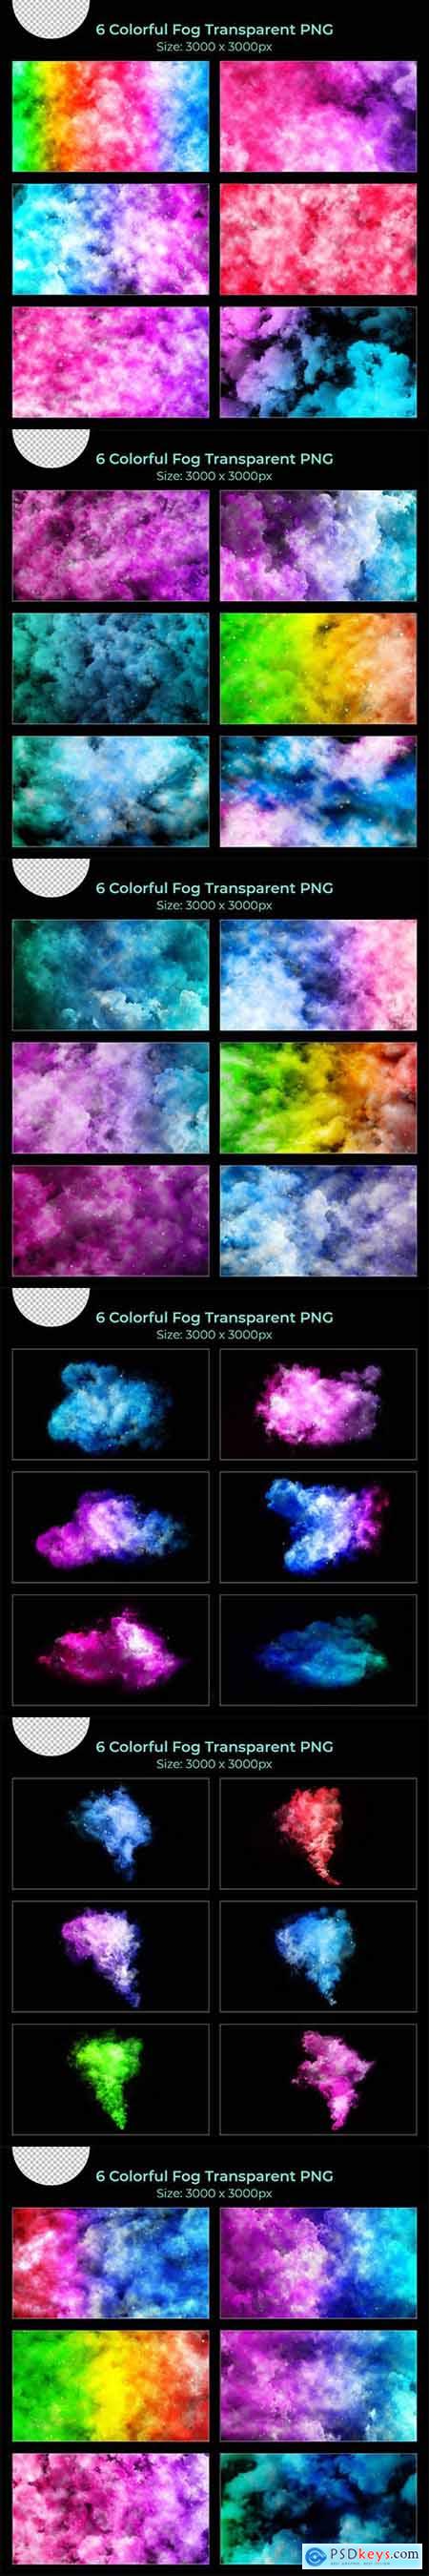 Colorful realistic various shapes of fogs + bonus